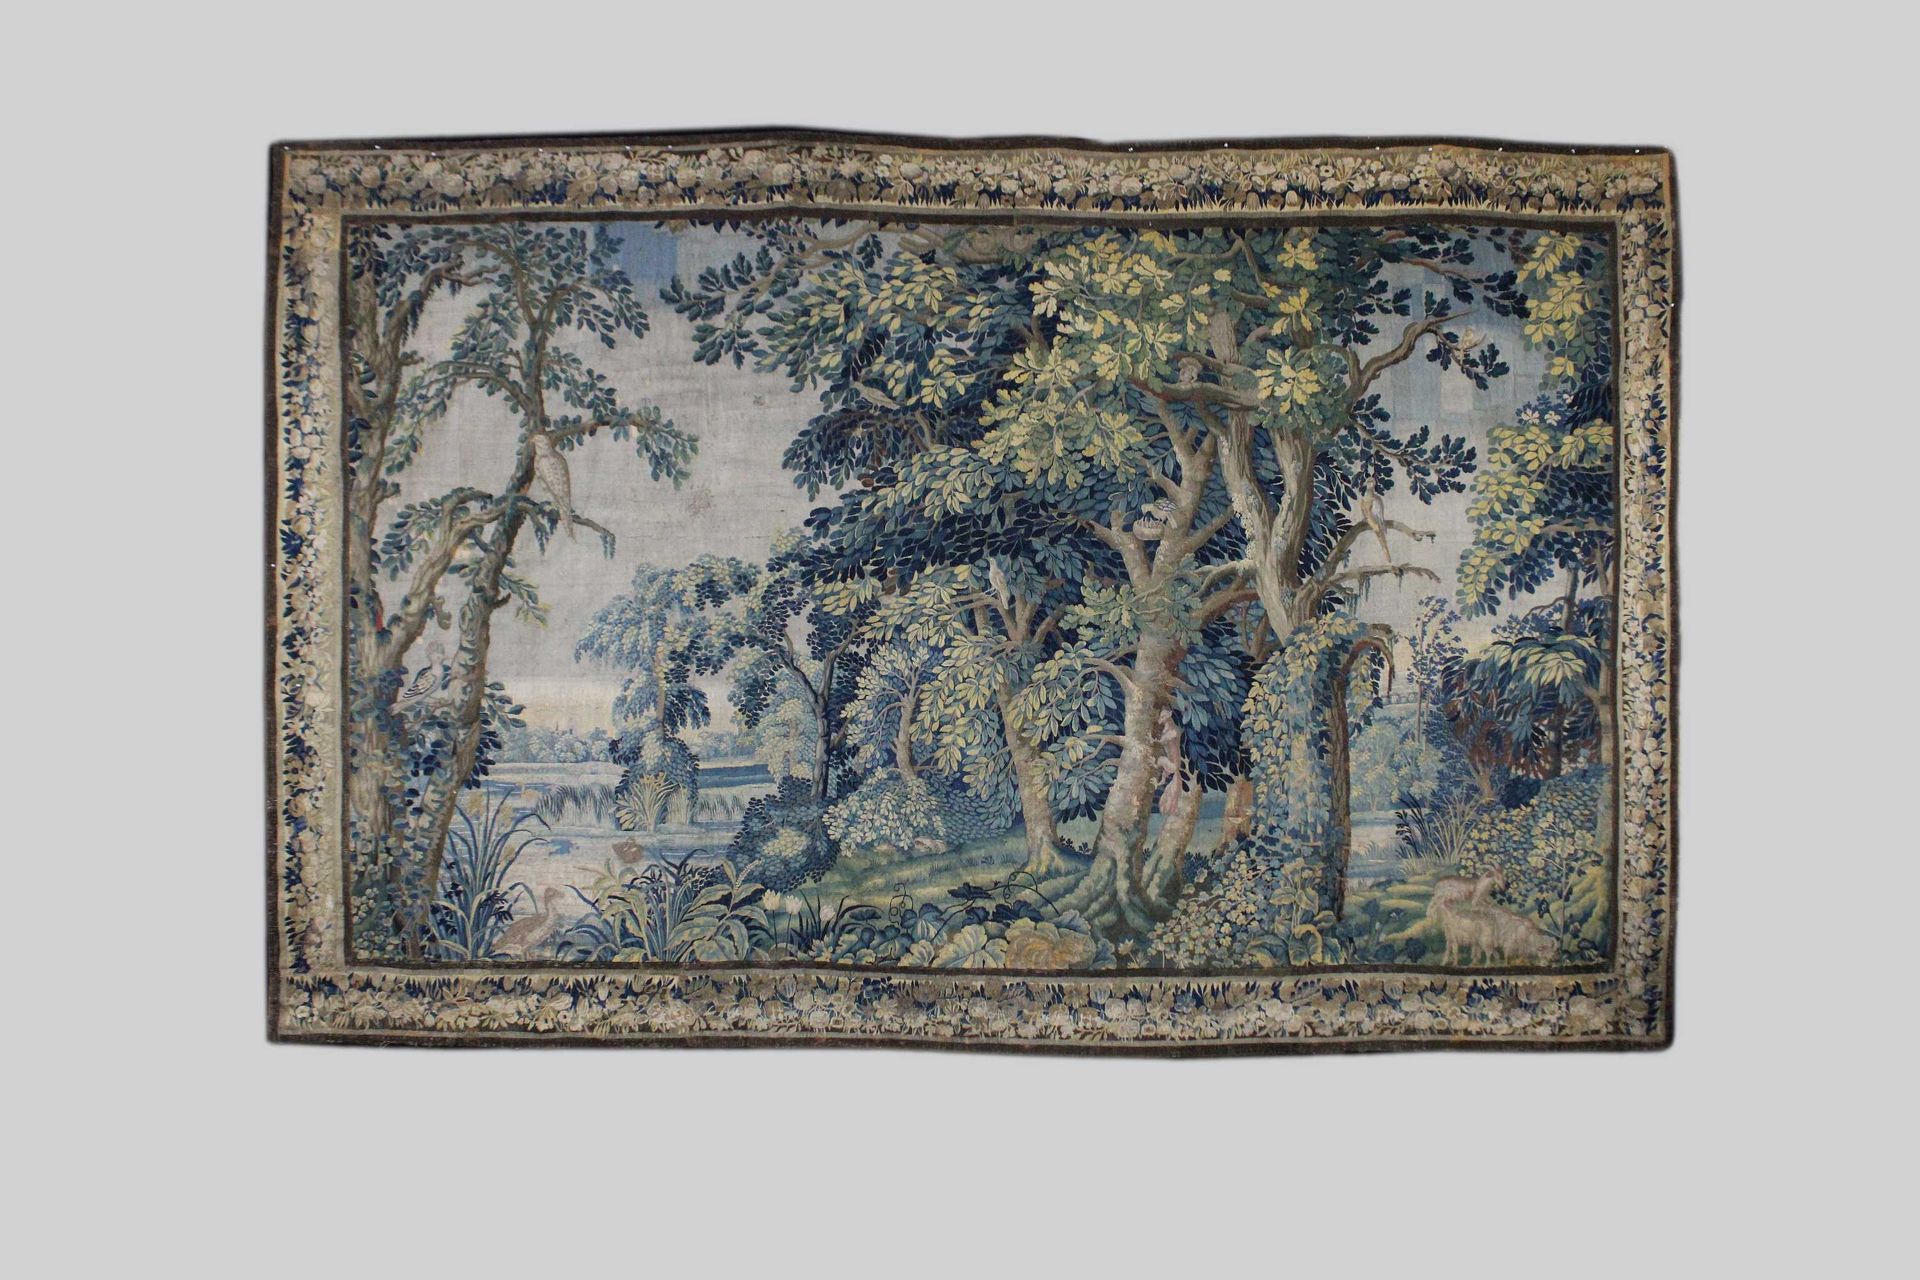 Tapisserie, Brüssel, 16.-17. Jh. 挂毯，布鲁塞尔，16-17世纪，有神话生物的森林场景。尺寸：475 x 385厘米。各种损坏，&hellip;